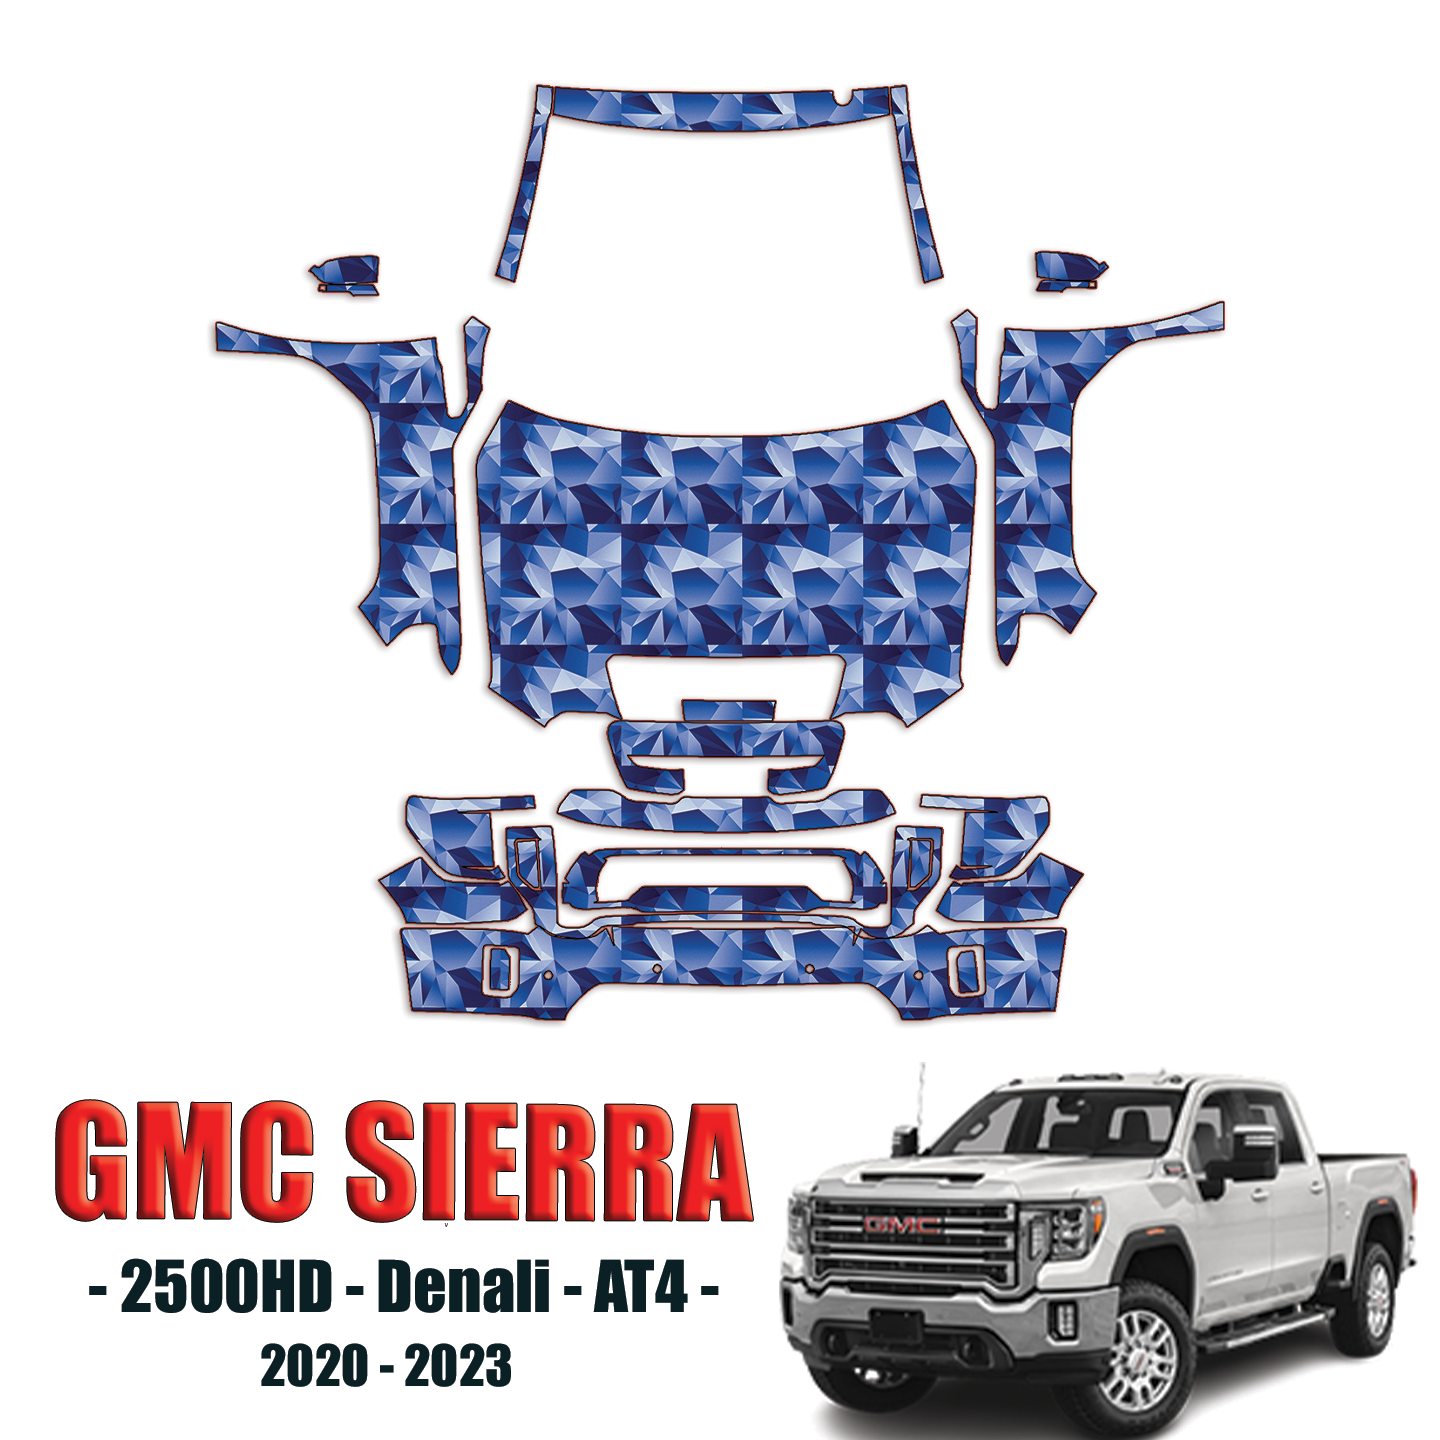 2020-2023 GMC Sierra 2500HD – Denali, AT4 Pre Cut Paint Protection Kit – Full Front